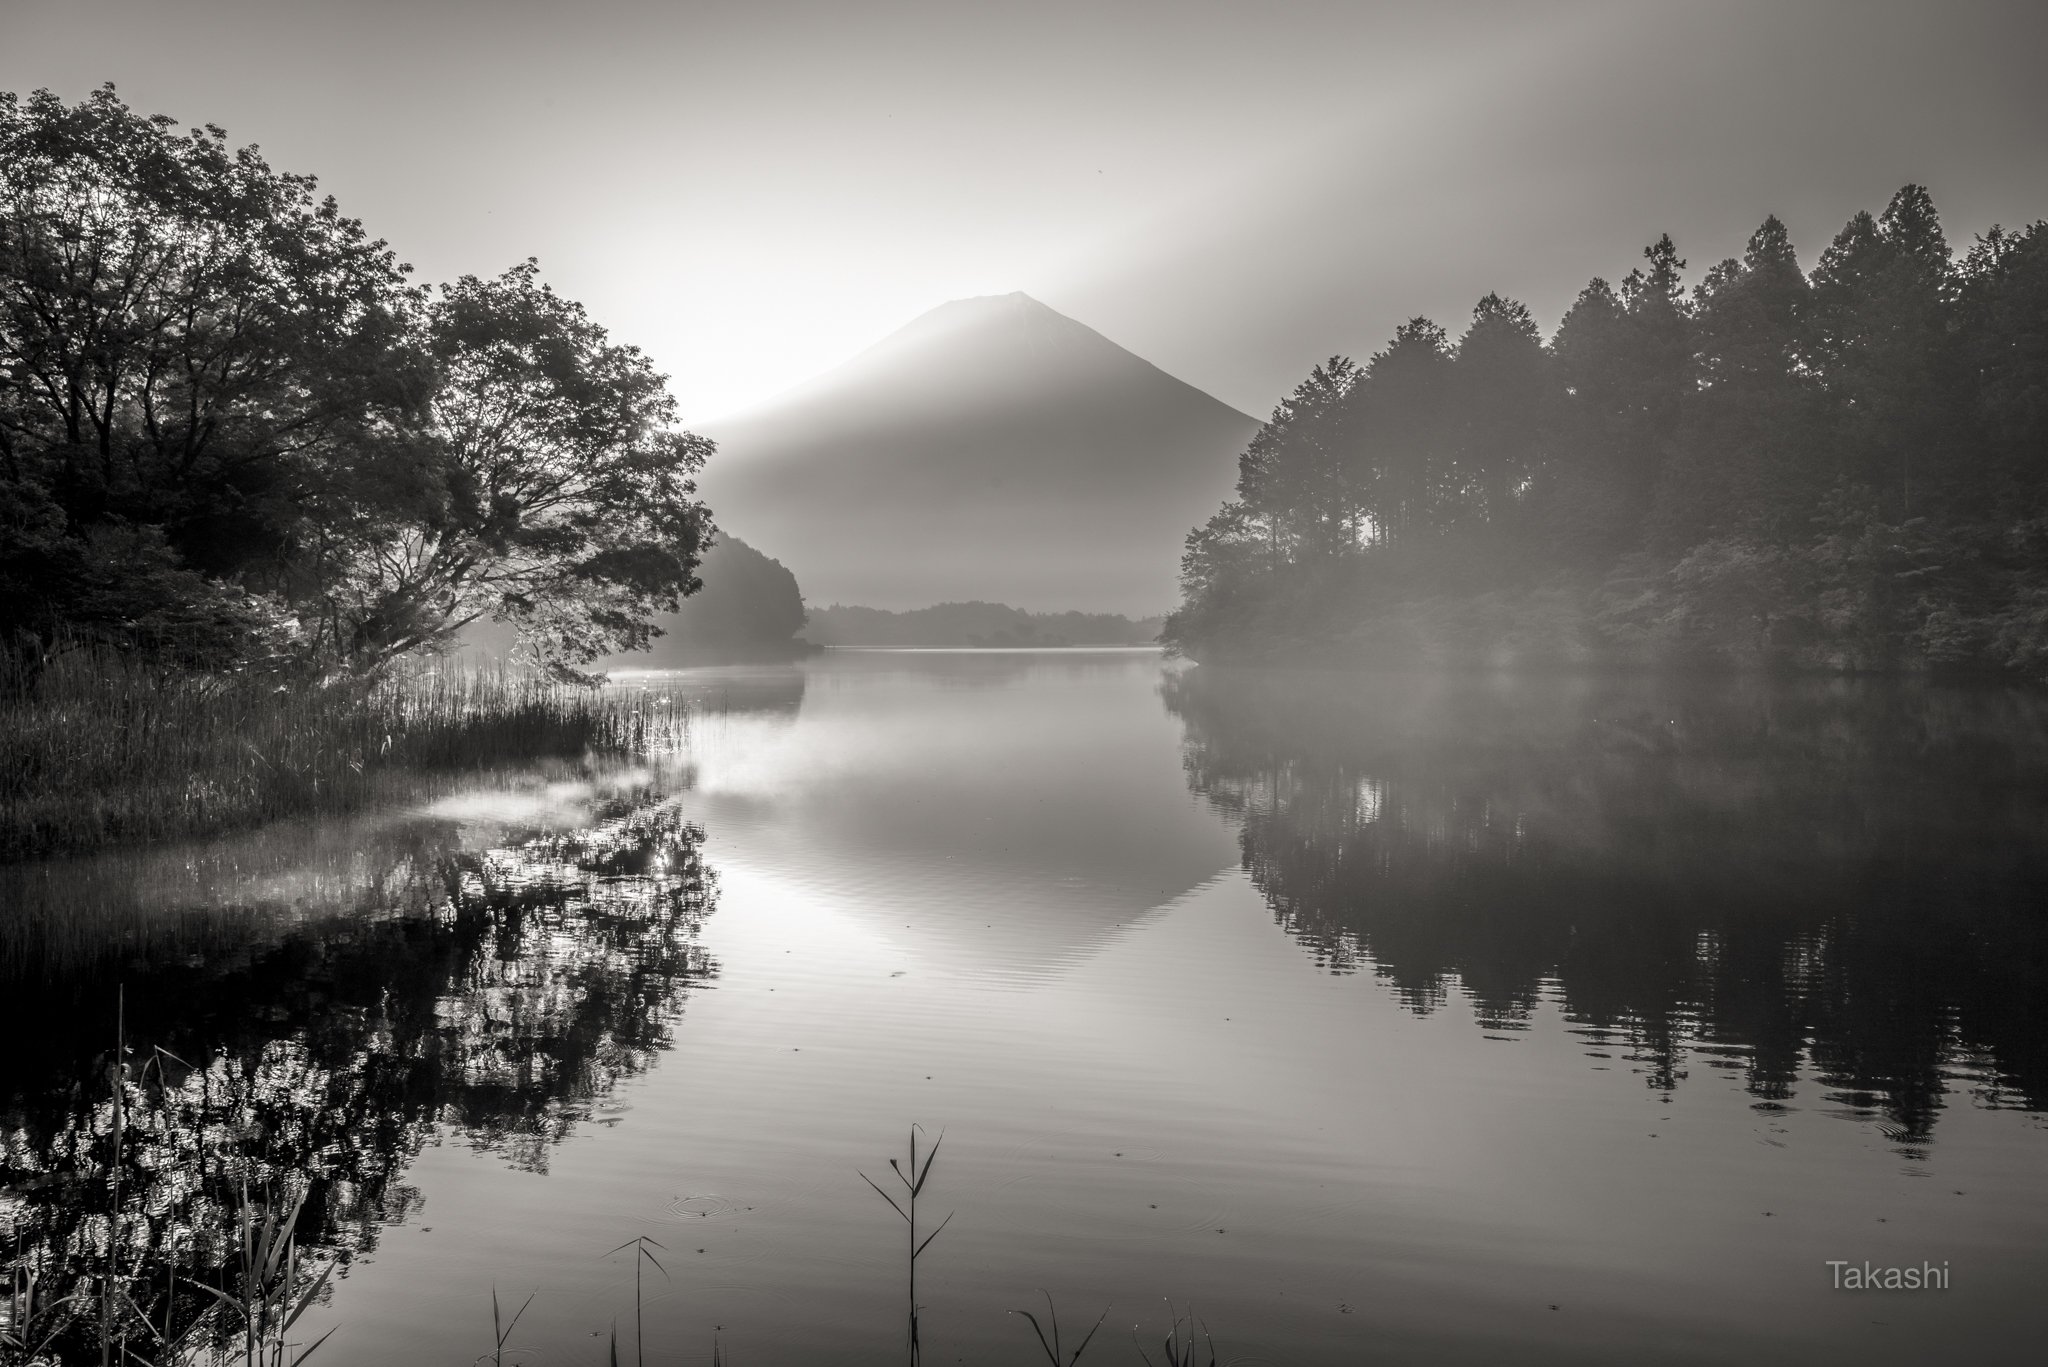 Fuji,mountain,Japan,lake,tree,sunrise,haze,gas,reflection, Takashi